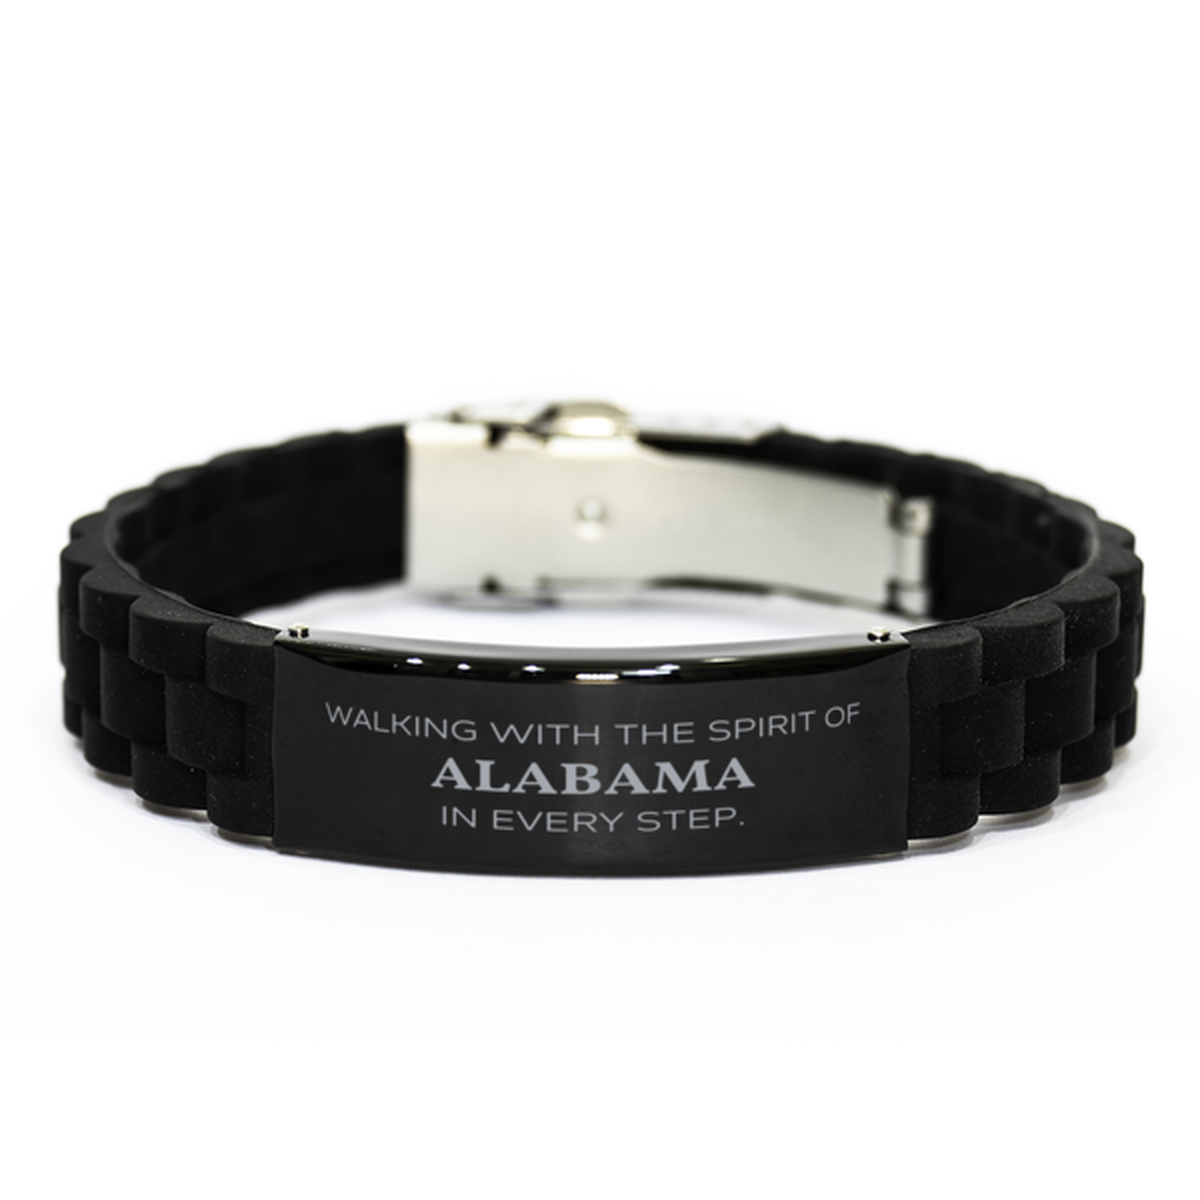 Alabama Gifts, Walking with the spirit, Love Alabama Birthday Christmas Black Glidelock Clasp Bracelet For Alabama People, Men, Women, Friends